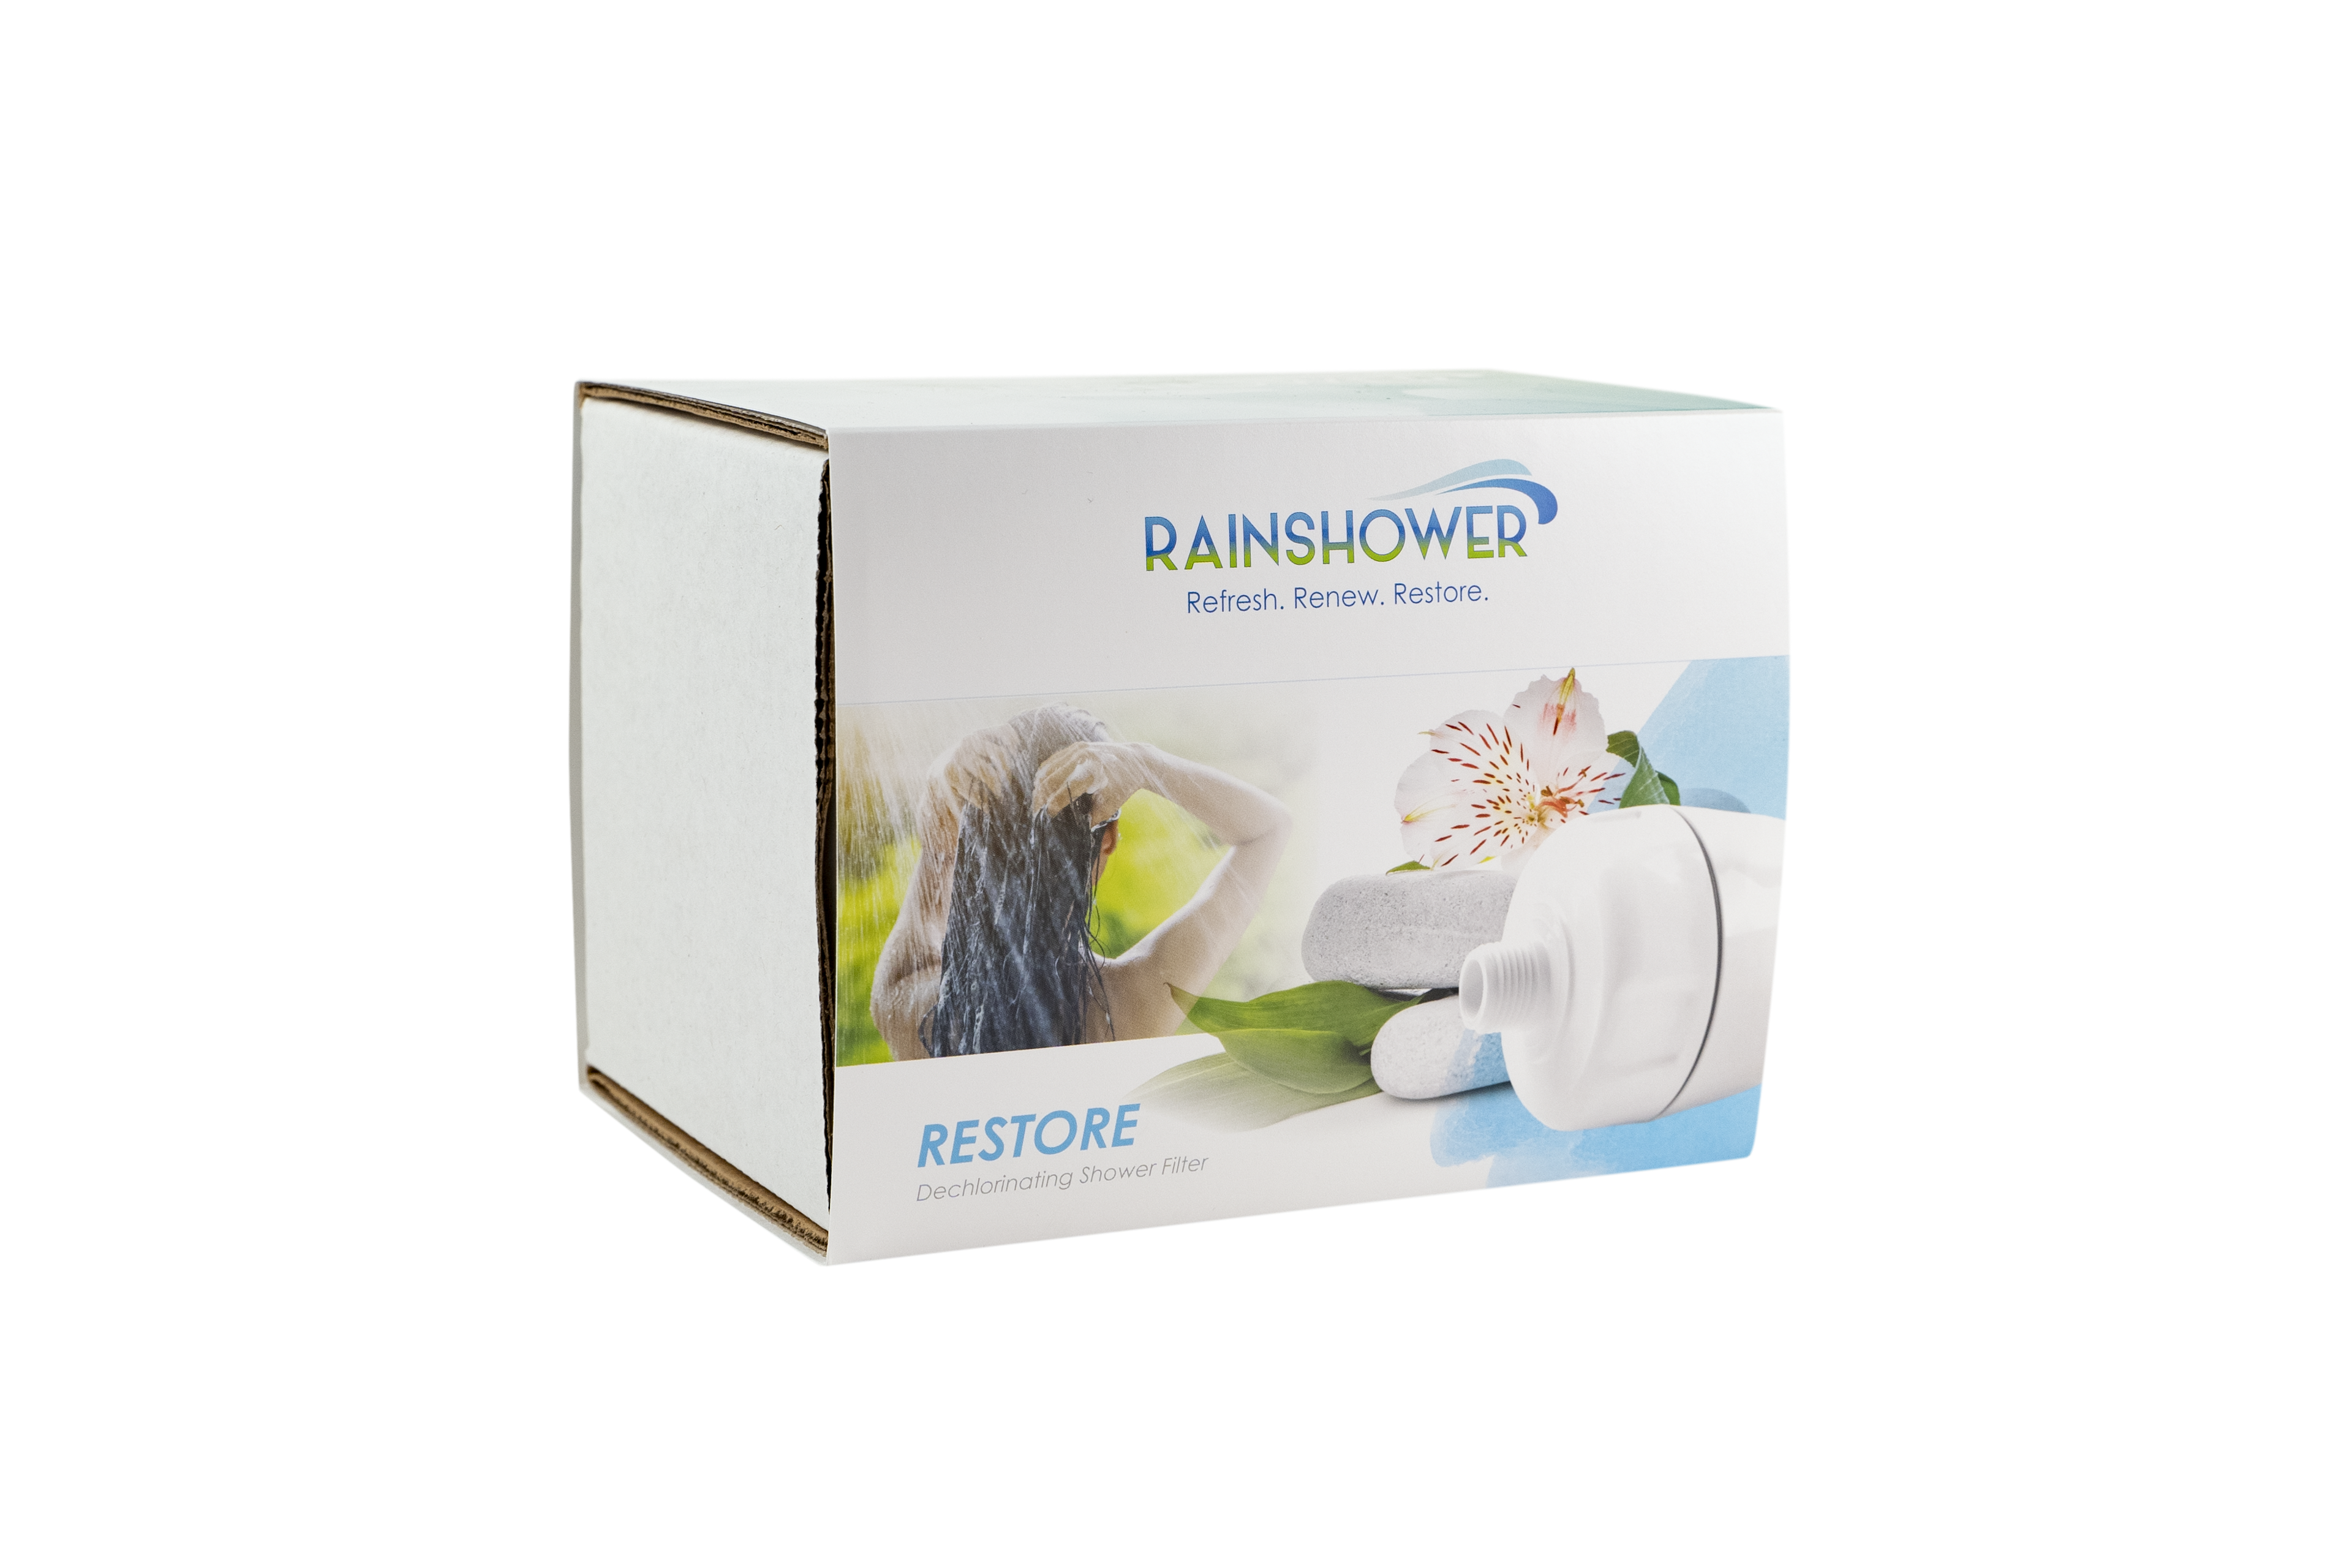 Rainshower Restore Shower Filter